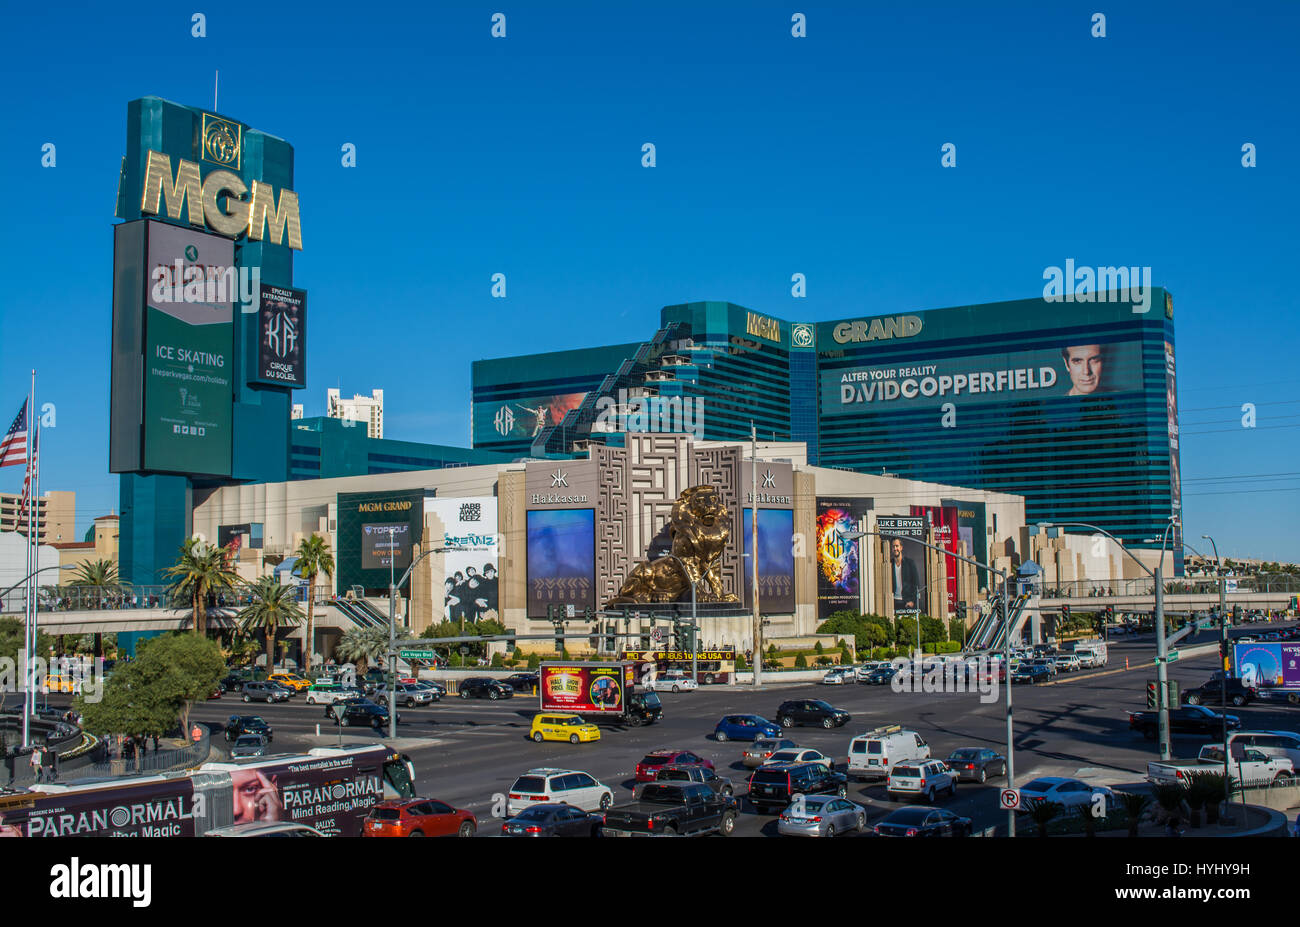 MGM Grand Hotel and Casino S. LAS VEGAS BLVD, LAS VEGAS, NEVADA, USA - NOV 25TH 2016: Across the intersection of Las Vegas Blvd and Tropicana Stock Photo